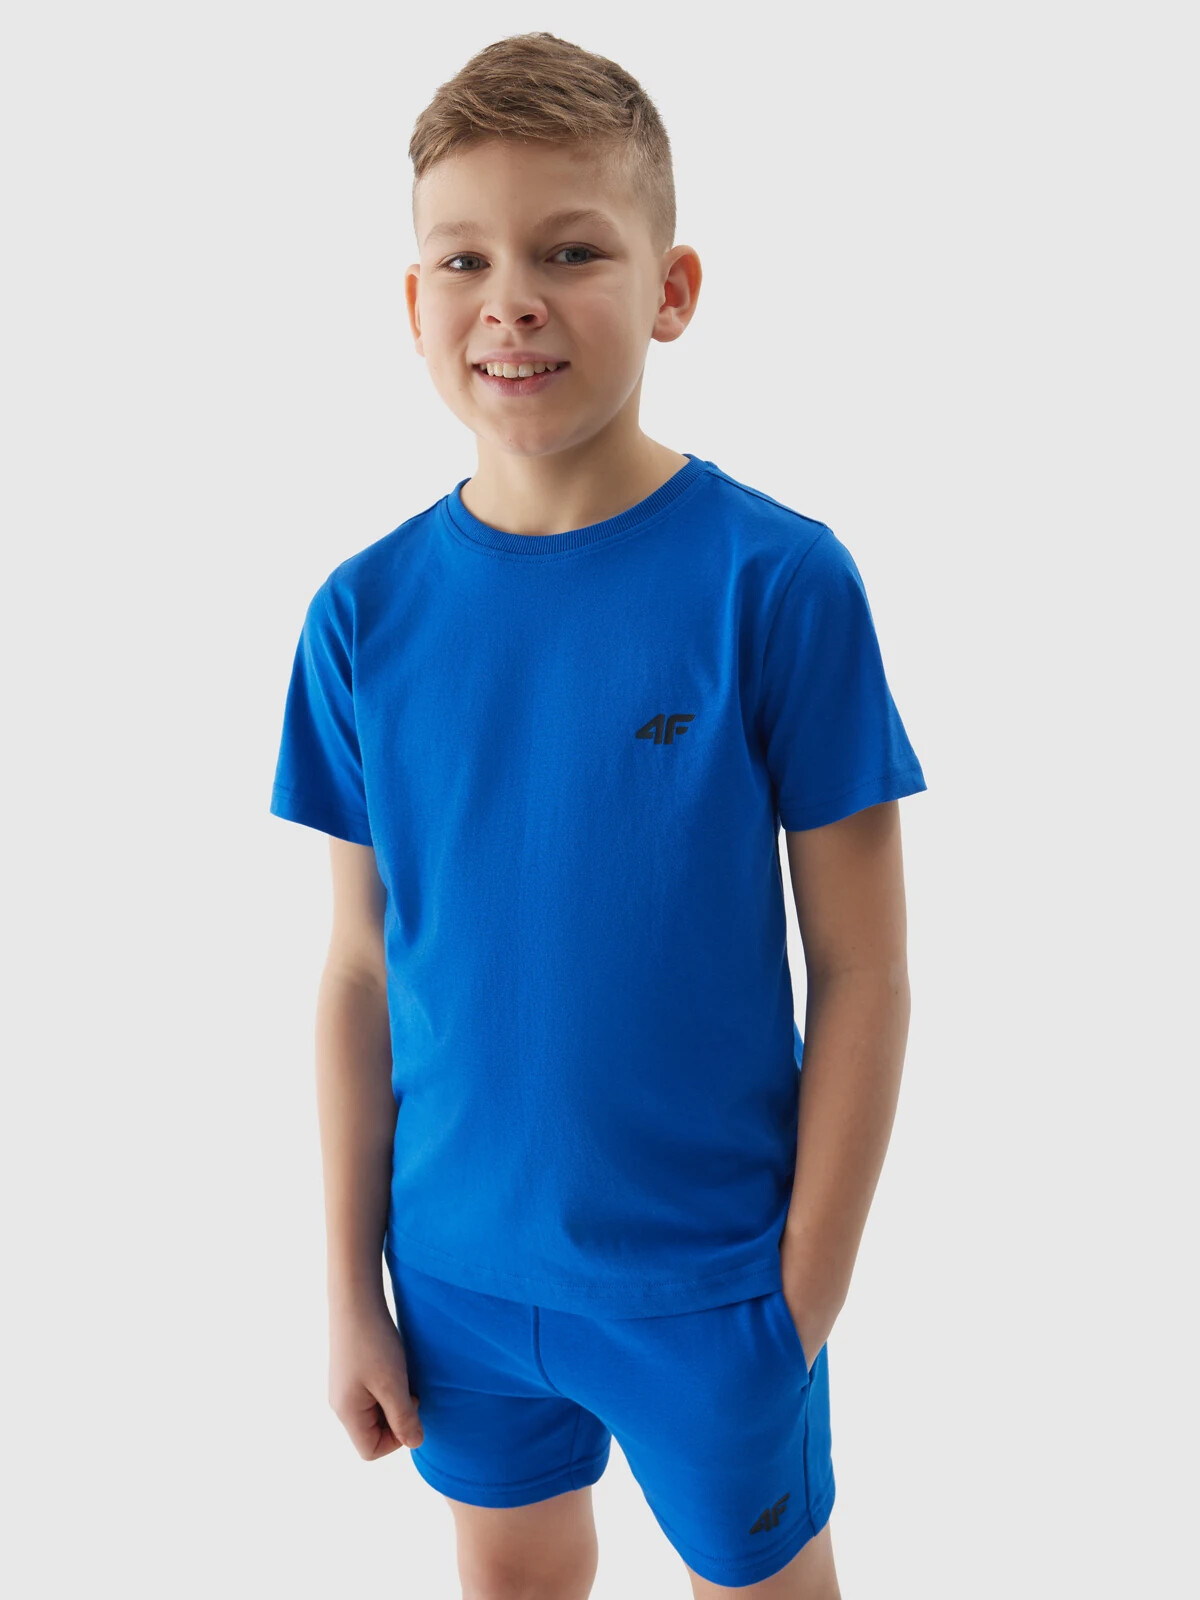 Boys' Plain T-Shirt 4F - Cobalt